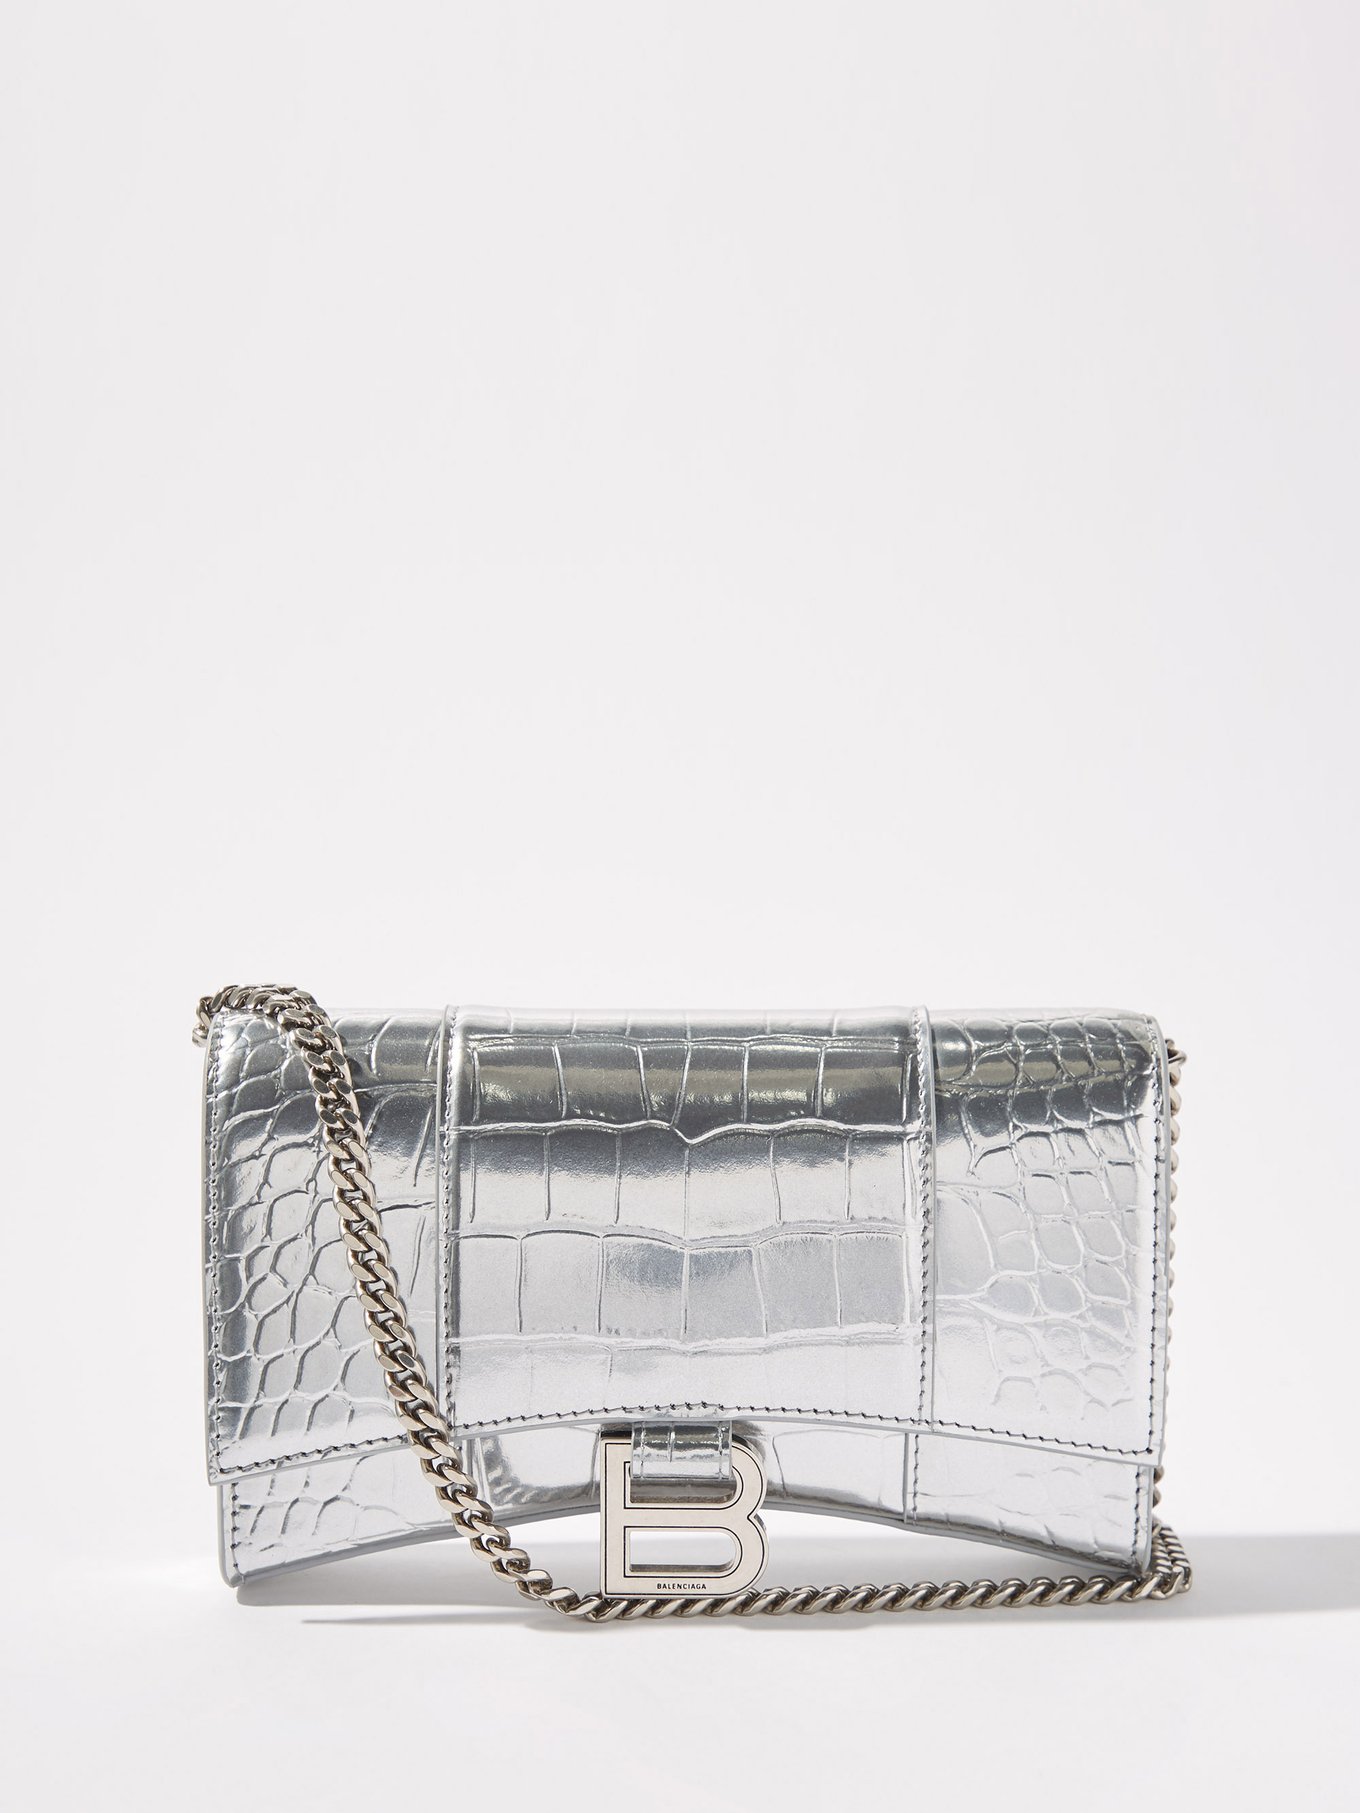 hourglass bag with chain crocodile embossed